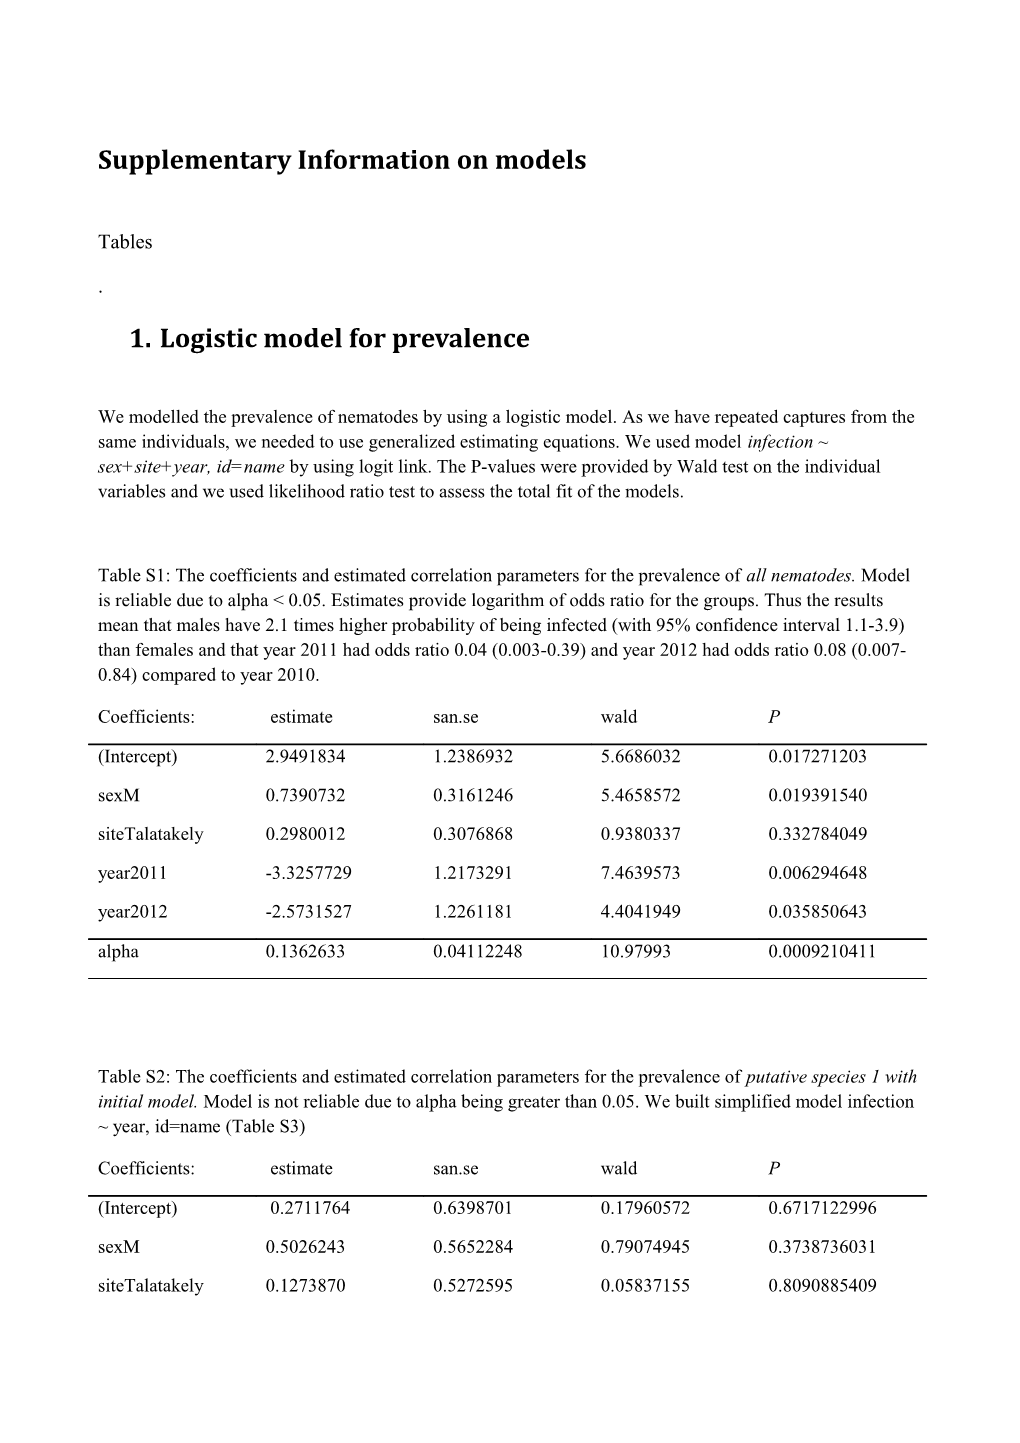 1.Logistic Model for Prevalence